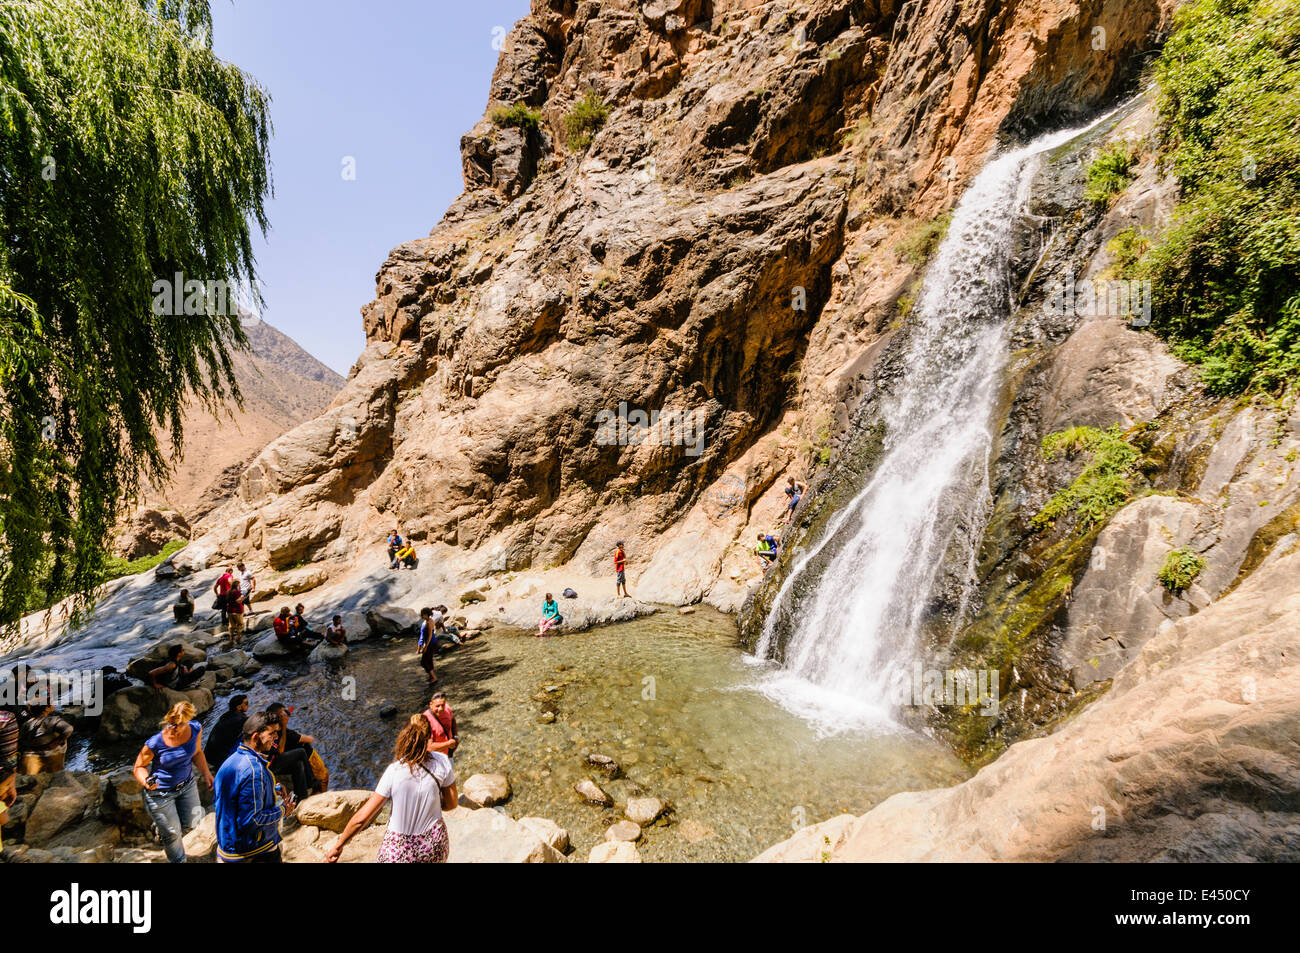 Cascade de Setti-Fatma, rivière de l'Ourika, la vallée de l'Ourika, Atlas, Maroc Banque D'Images